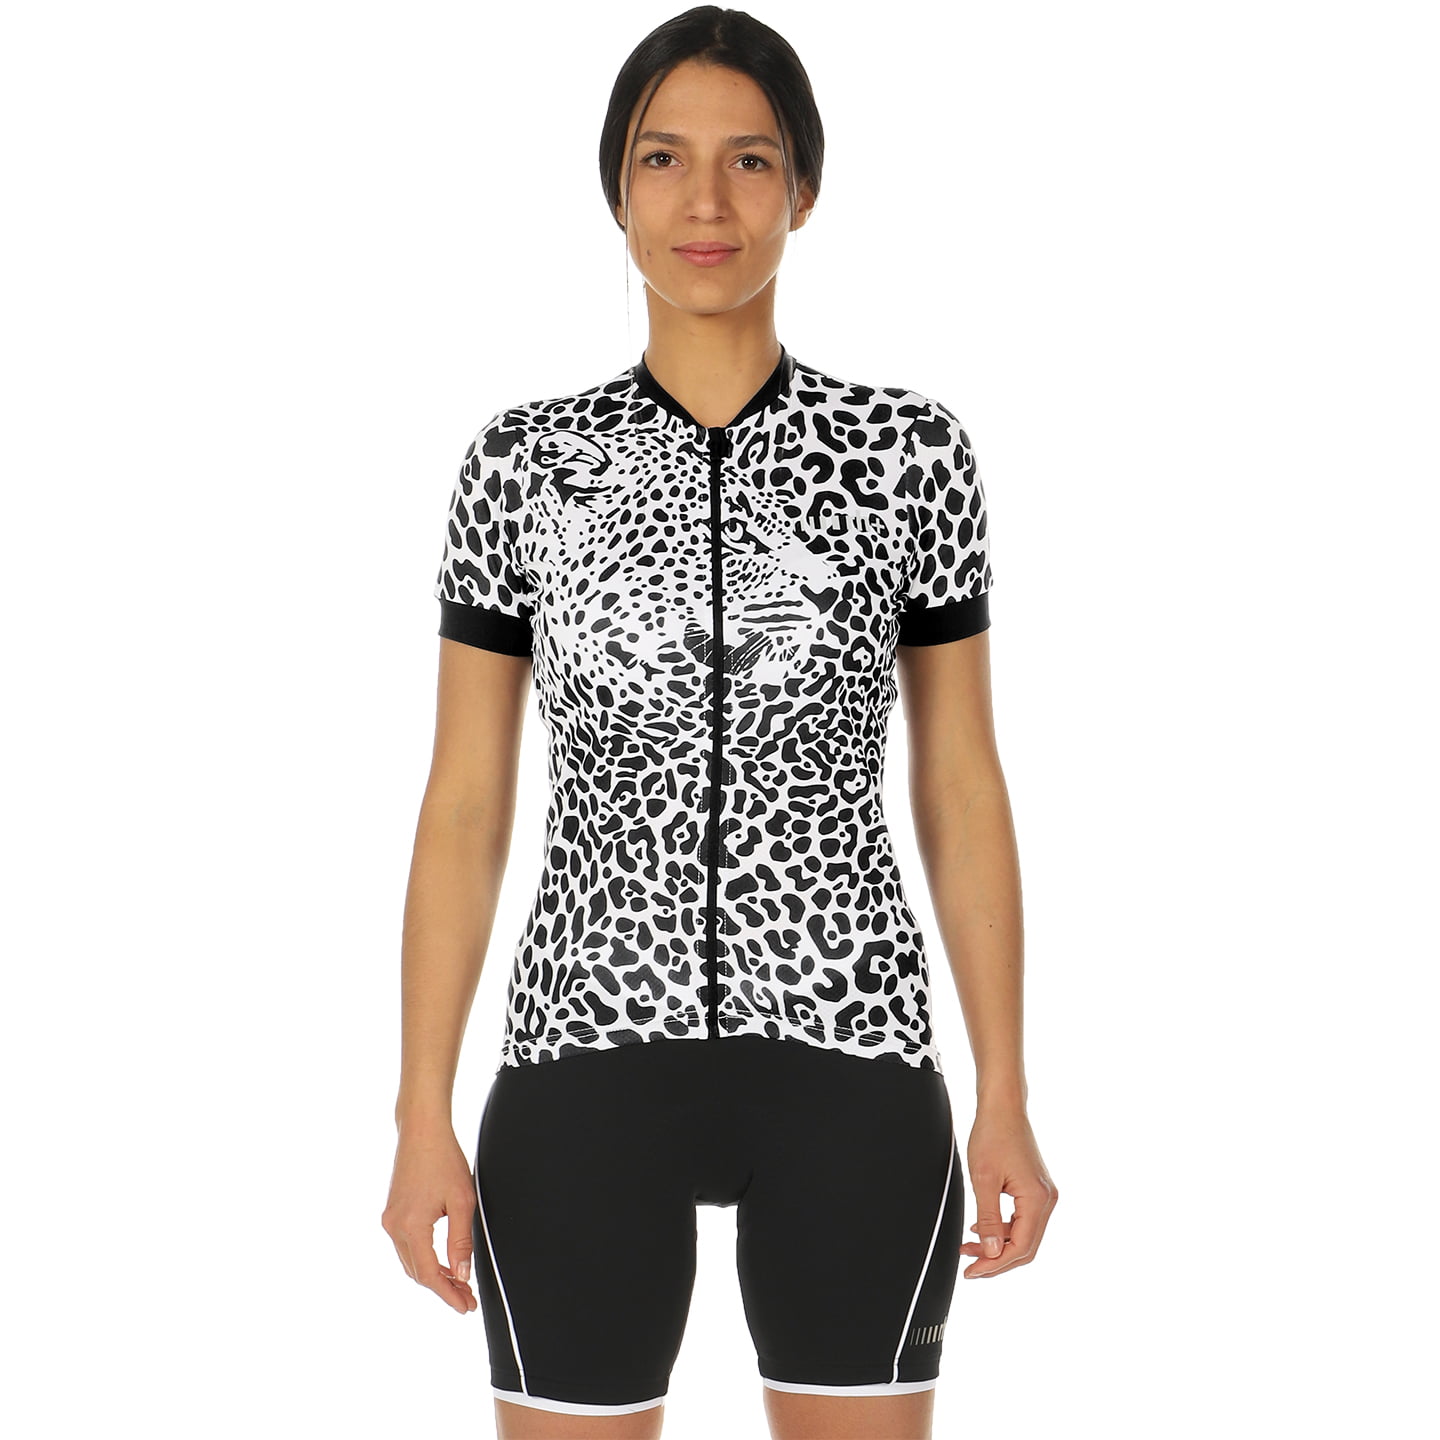 RH+ Fashion Evo Women’s Set (cycling jersey + cycling shorts) Women’s Set (2 pieces), Cycling clothing